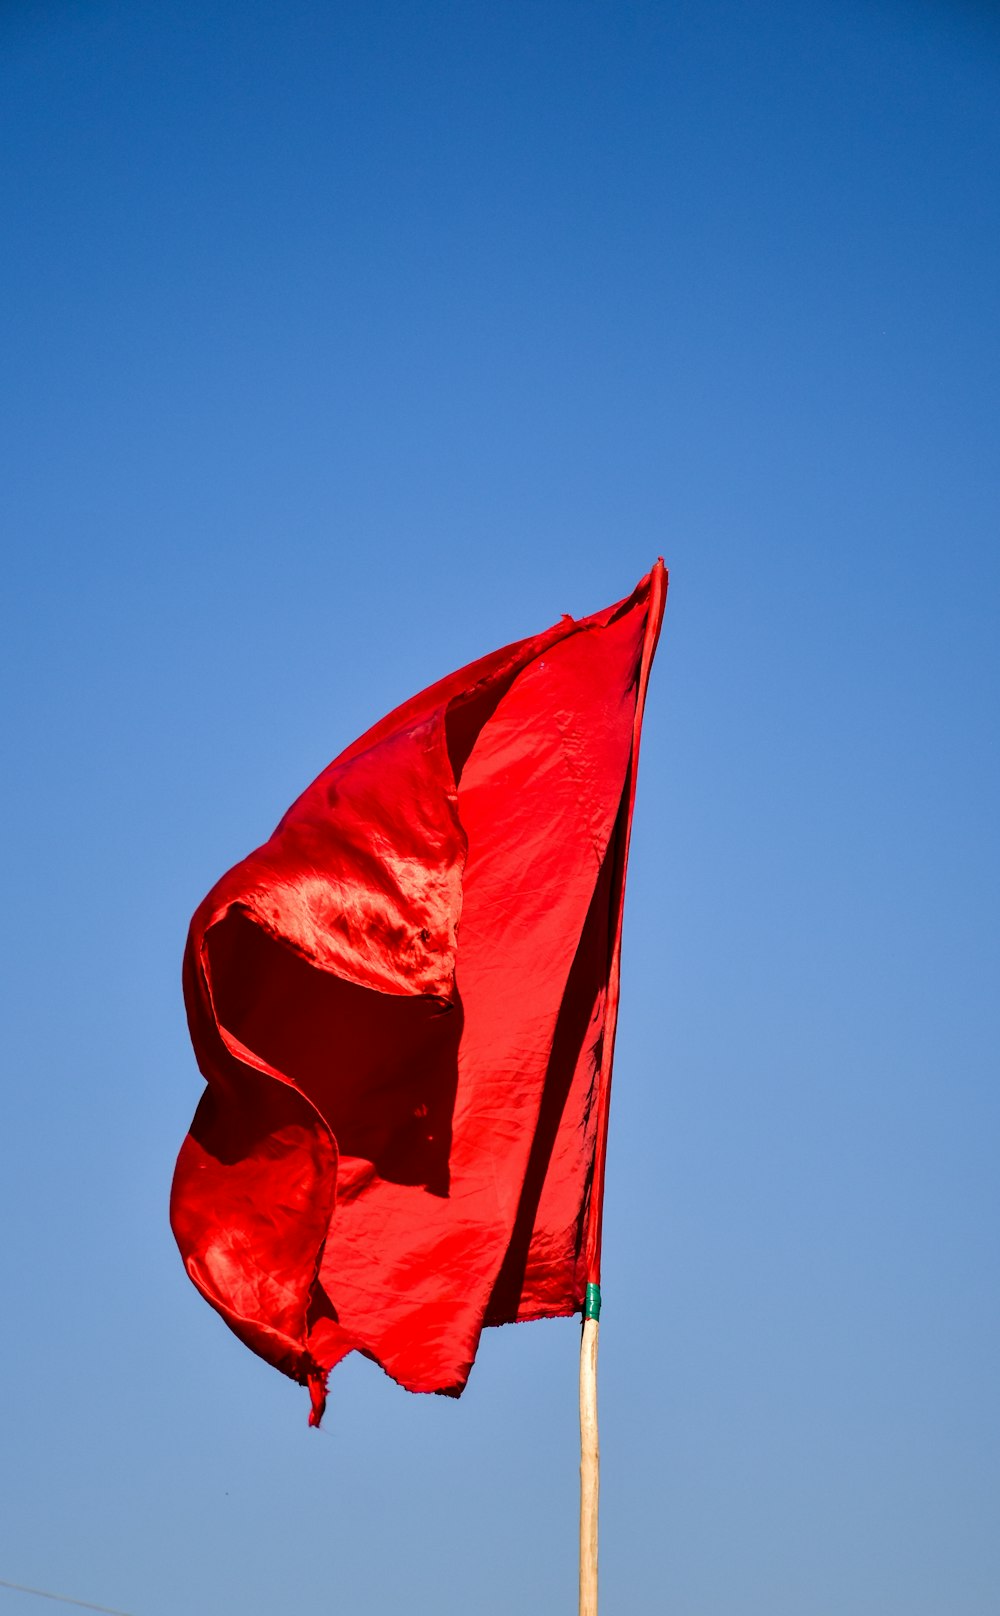 red flag under blue sky during daytime